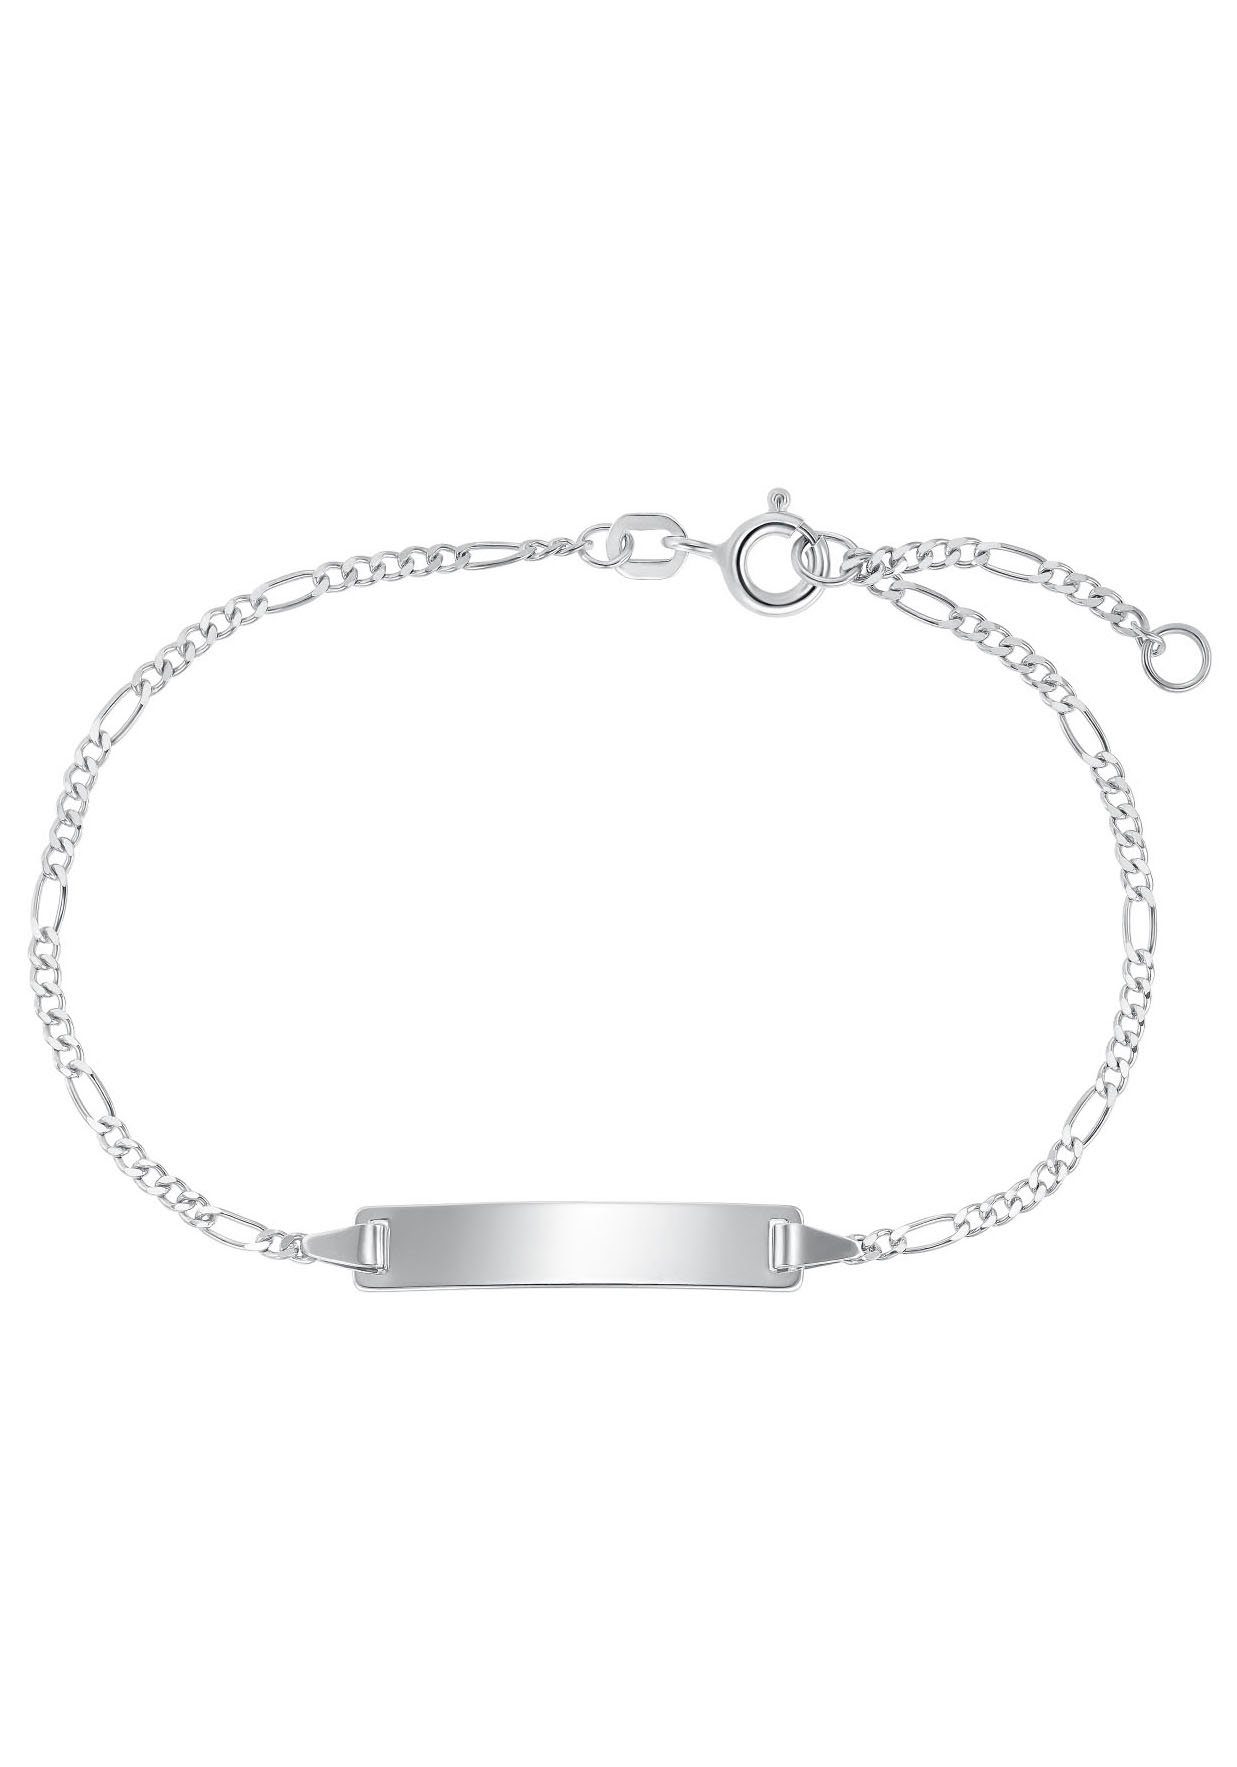 Germany Ident Bracelet, Made Amor Armband ID 2016492, in